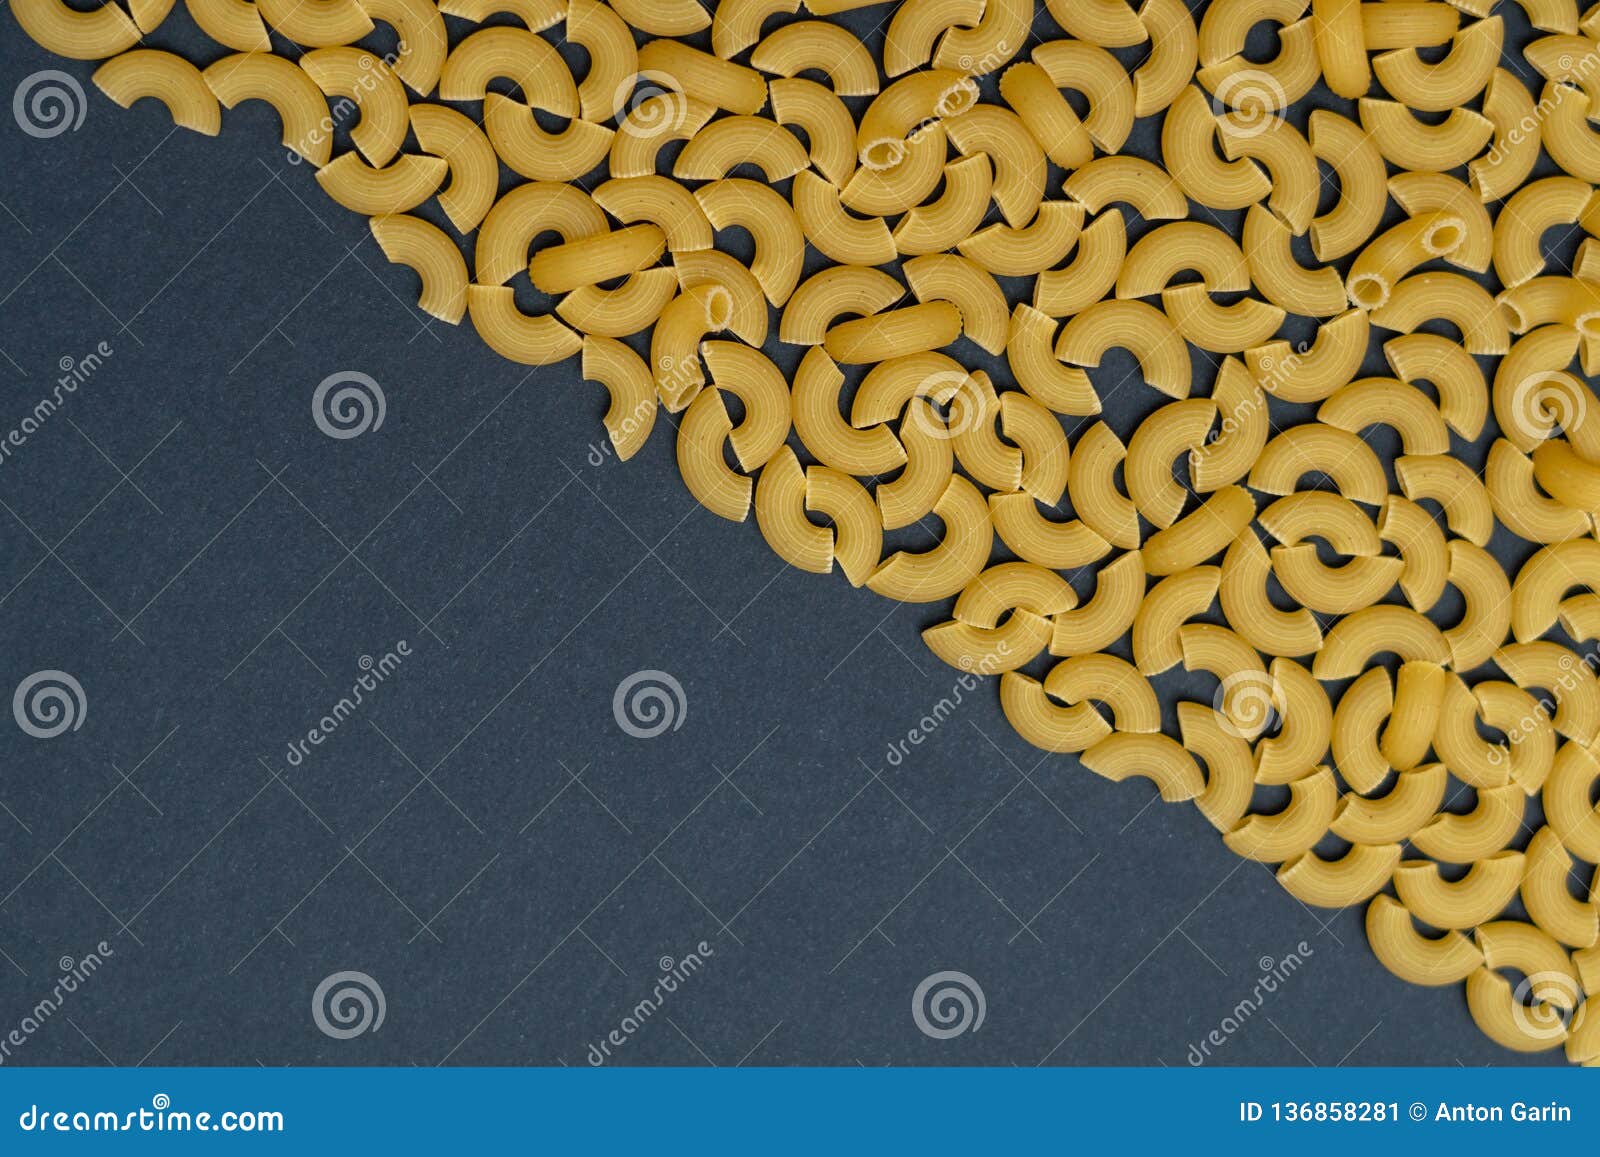 Download Pasta Pipe Doppia Rigatura Stock Image Image Of Close Rigatura 136858281 Yellowimages Mockups